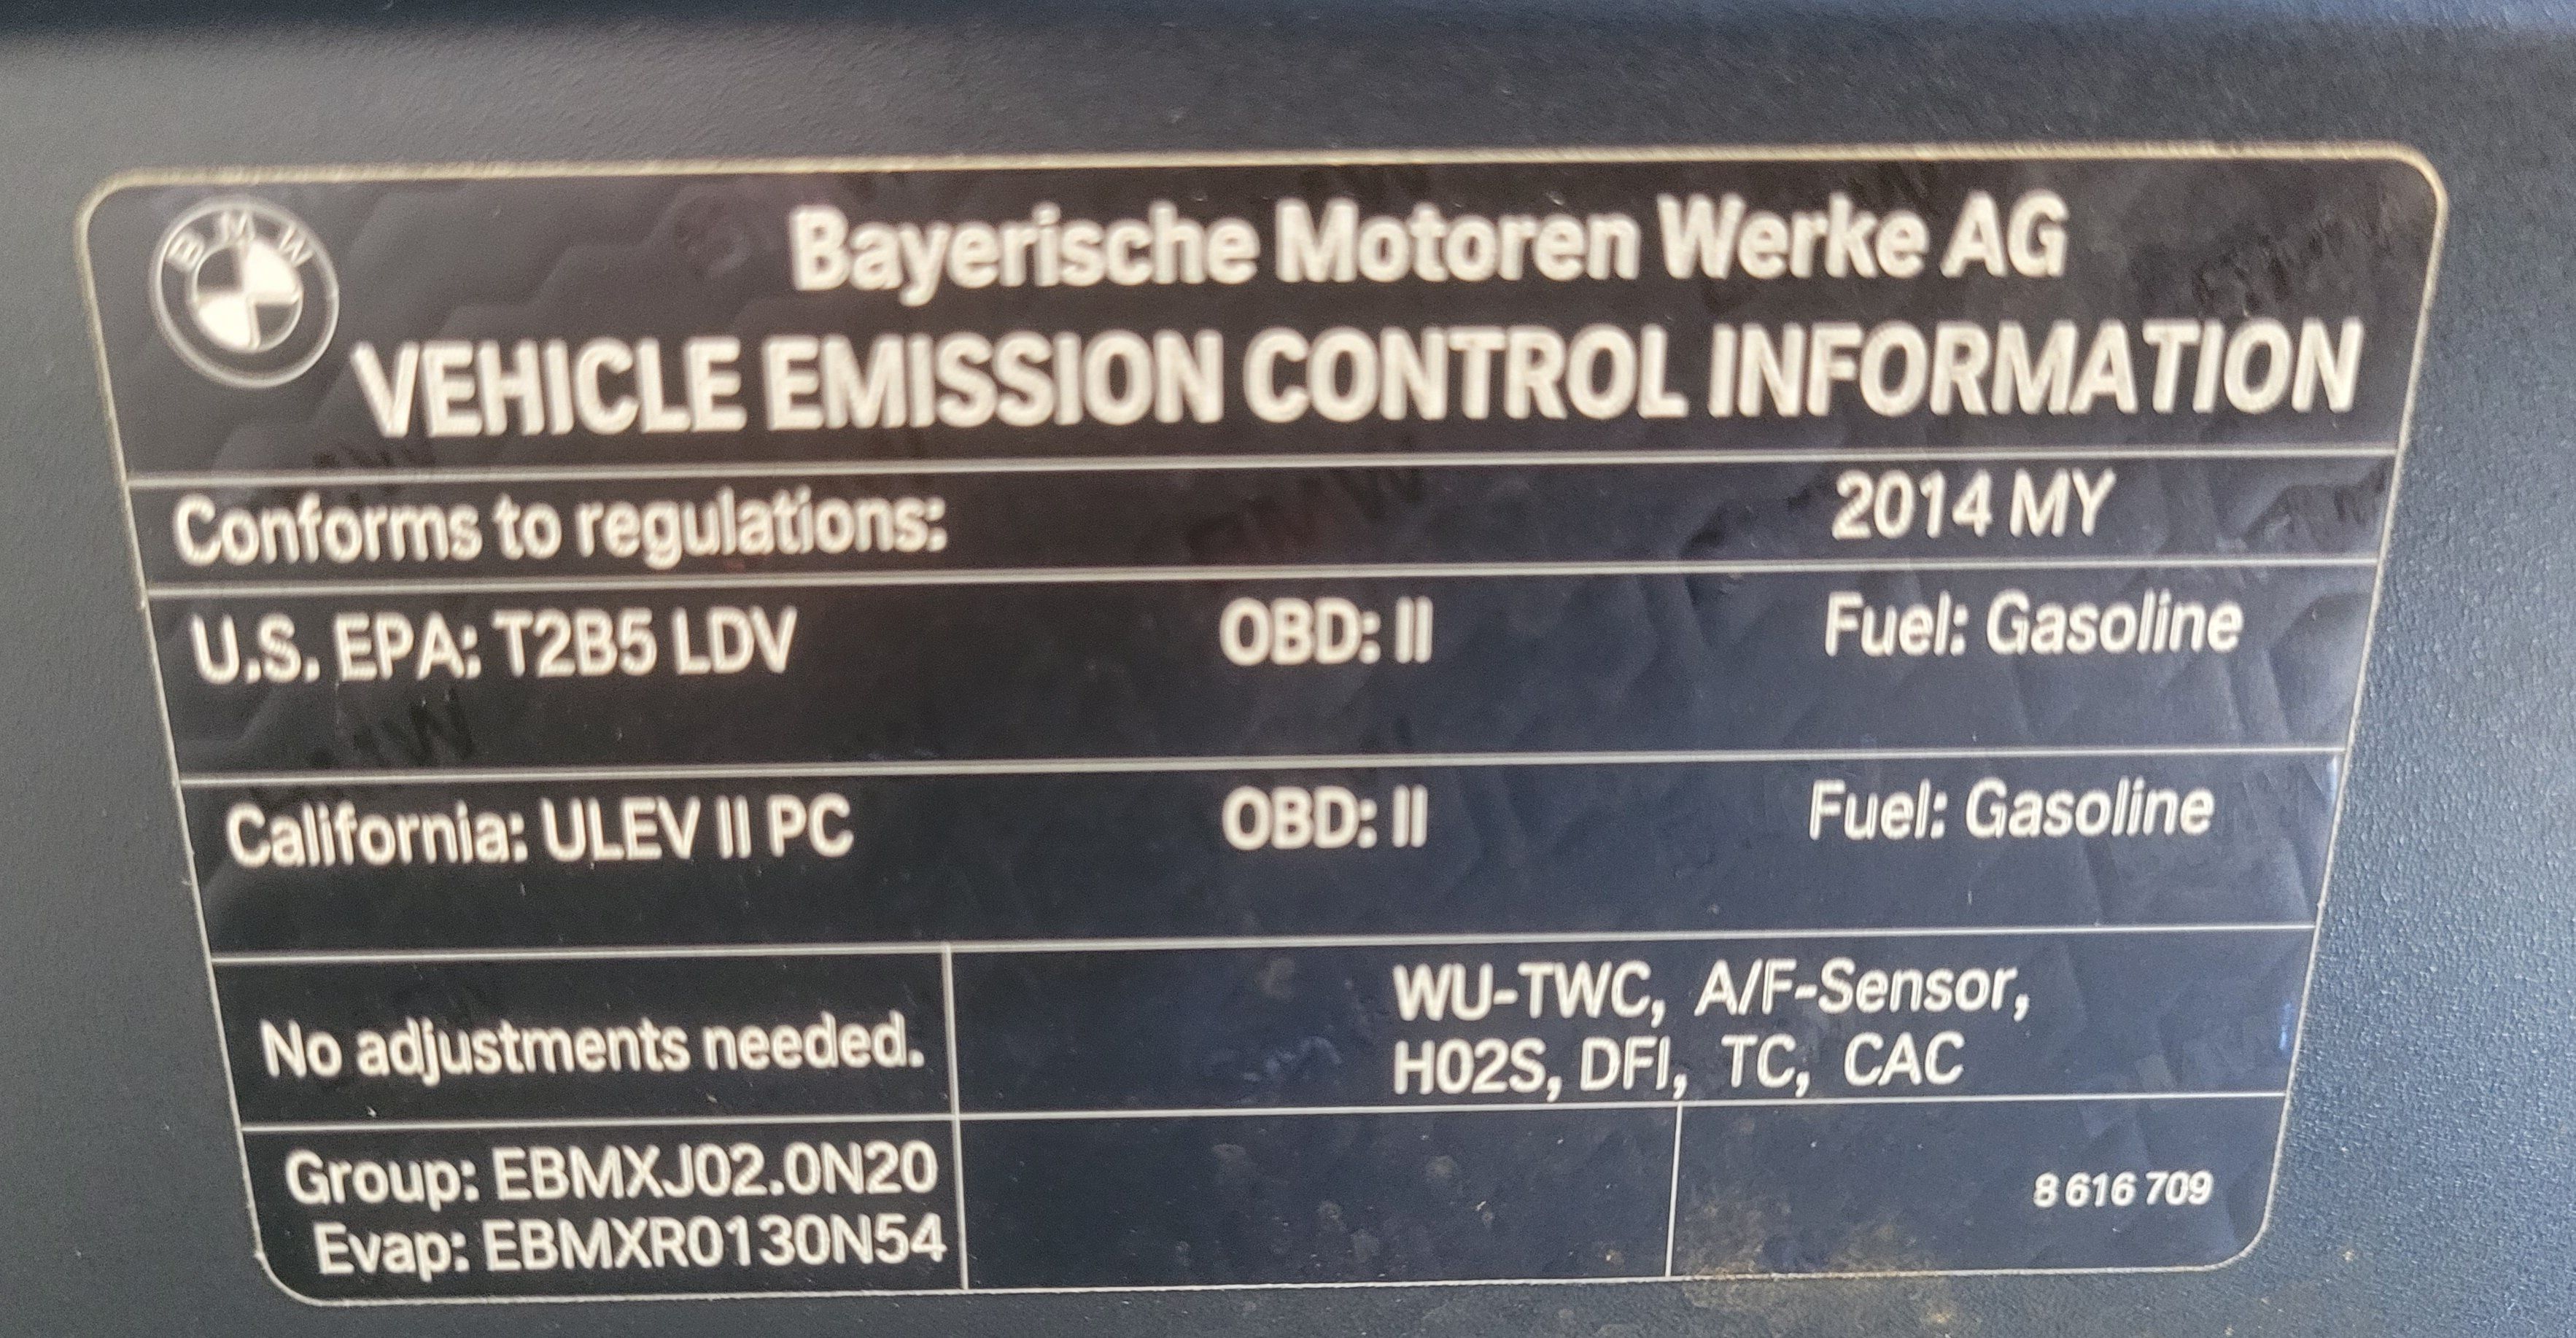 A BMW Vehicle Emission Label: Vehicle Emission Control Information